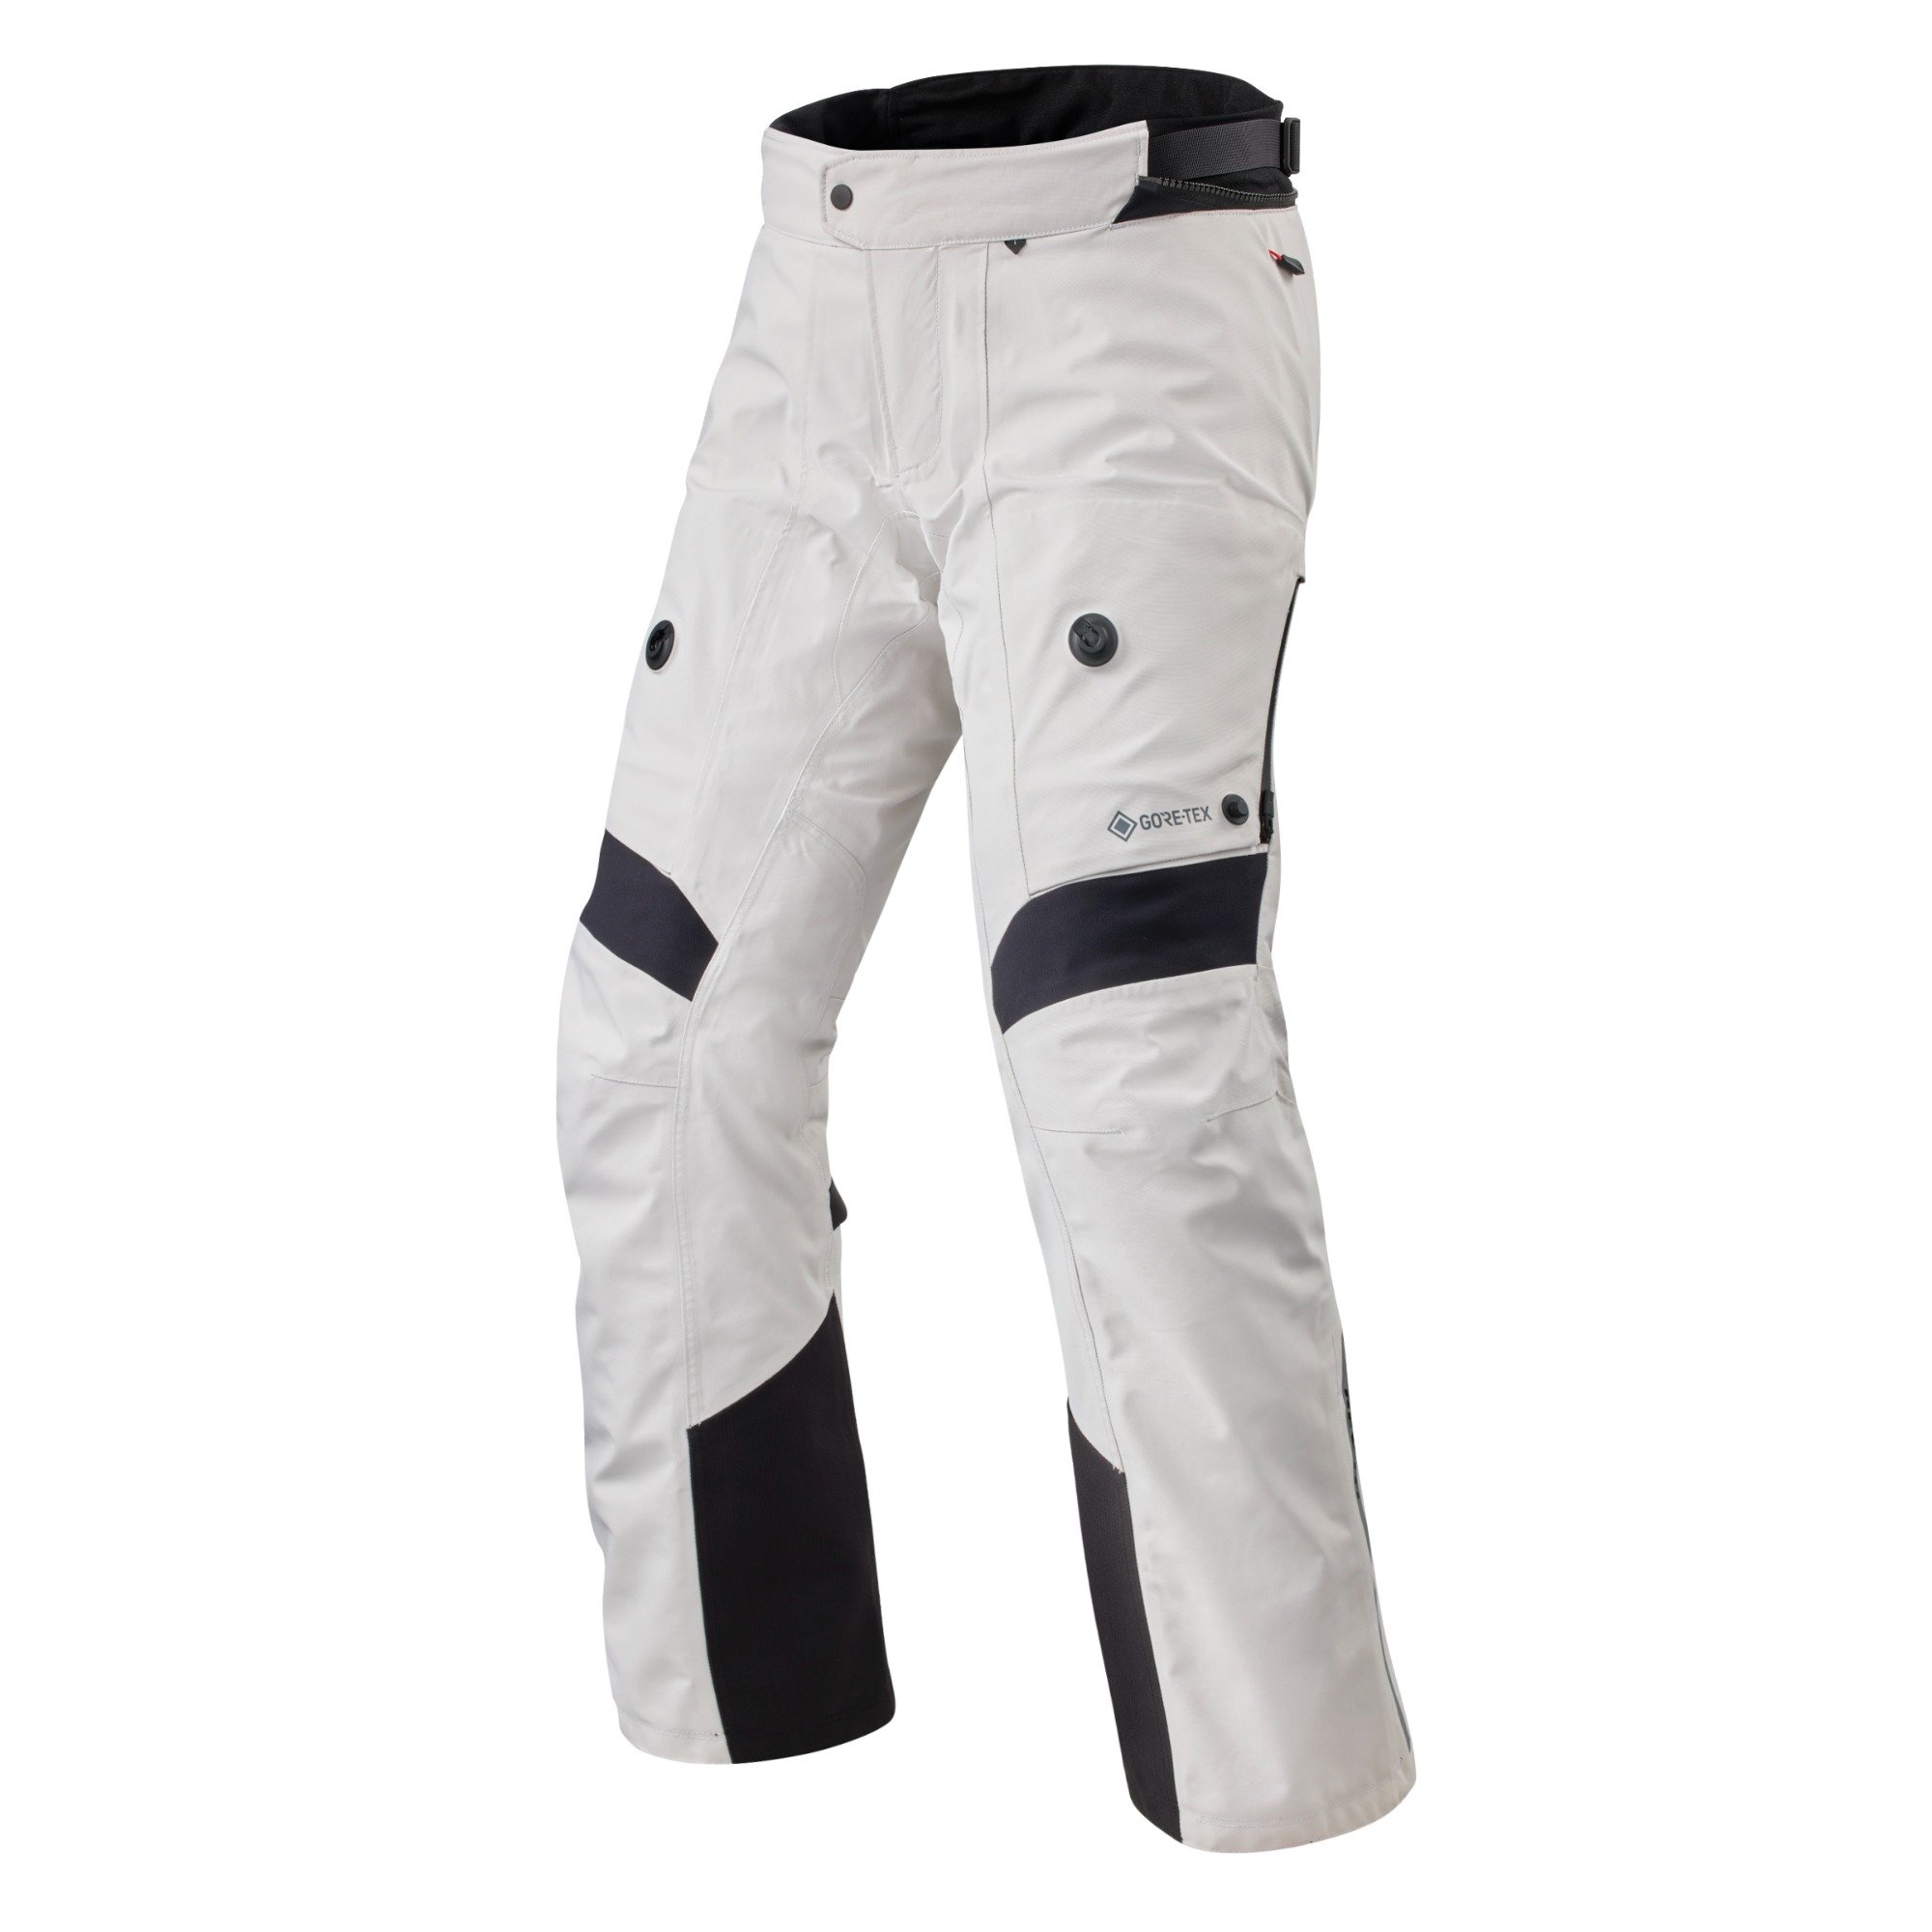 Image of REV'IT! Pants Poseidon 3 GTX Silver Black Short Motorcycle Pants Size 2XL ID 8700001362672